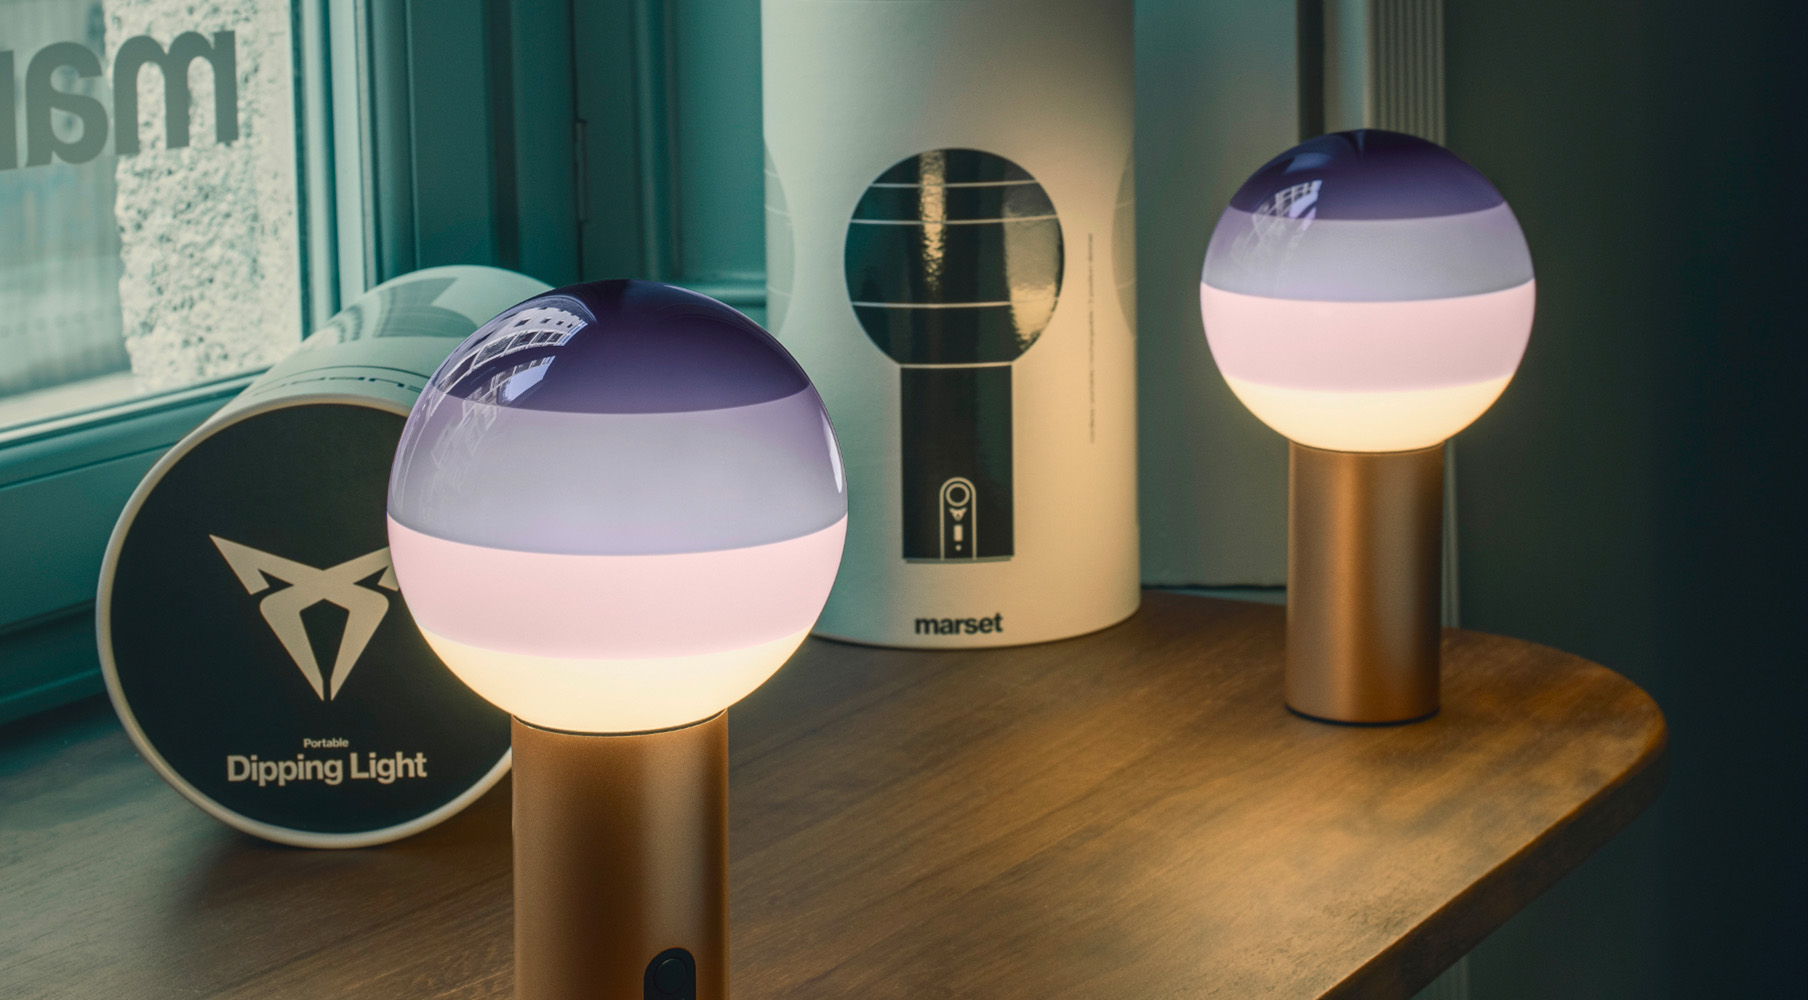 CUPRA-and-Marset-introduce-the-new-Marset-X-CUPRA-Dipping-Light-portable-lamp_02_HQ